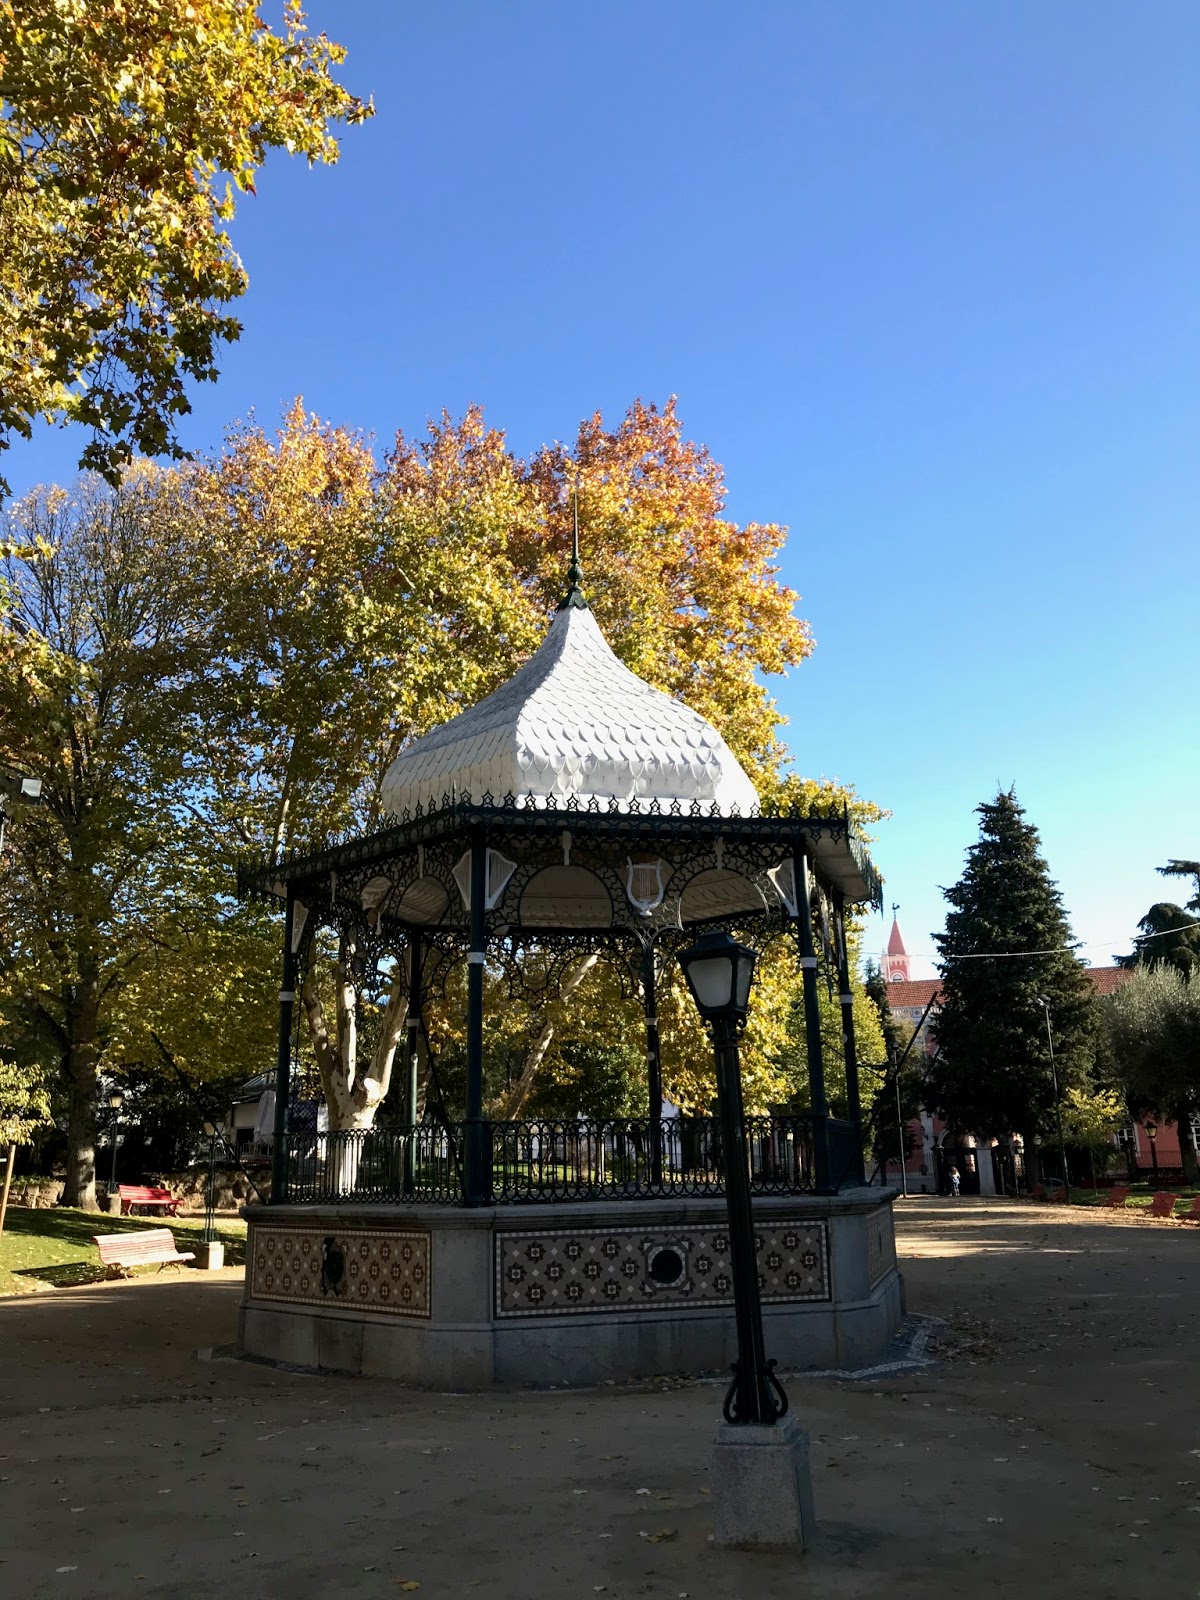 Jardim Público de Évora - Portugal